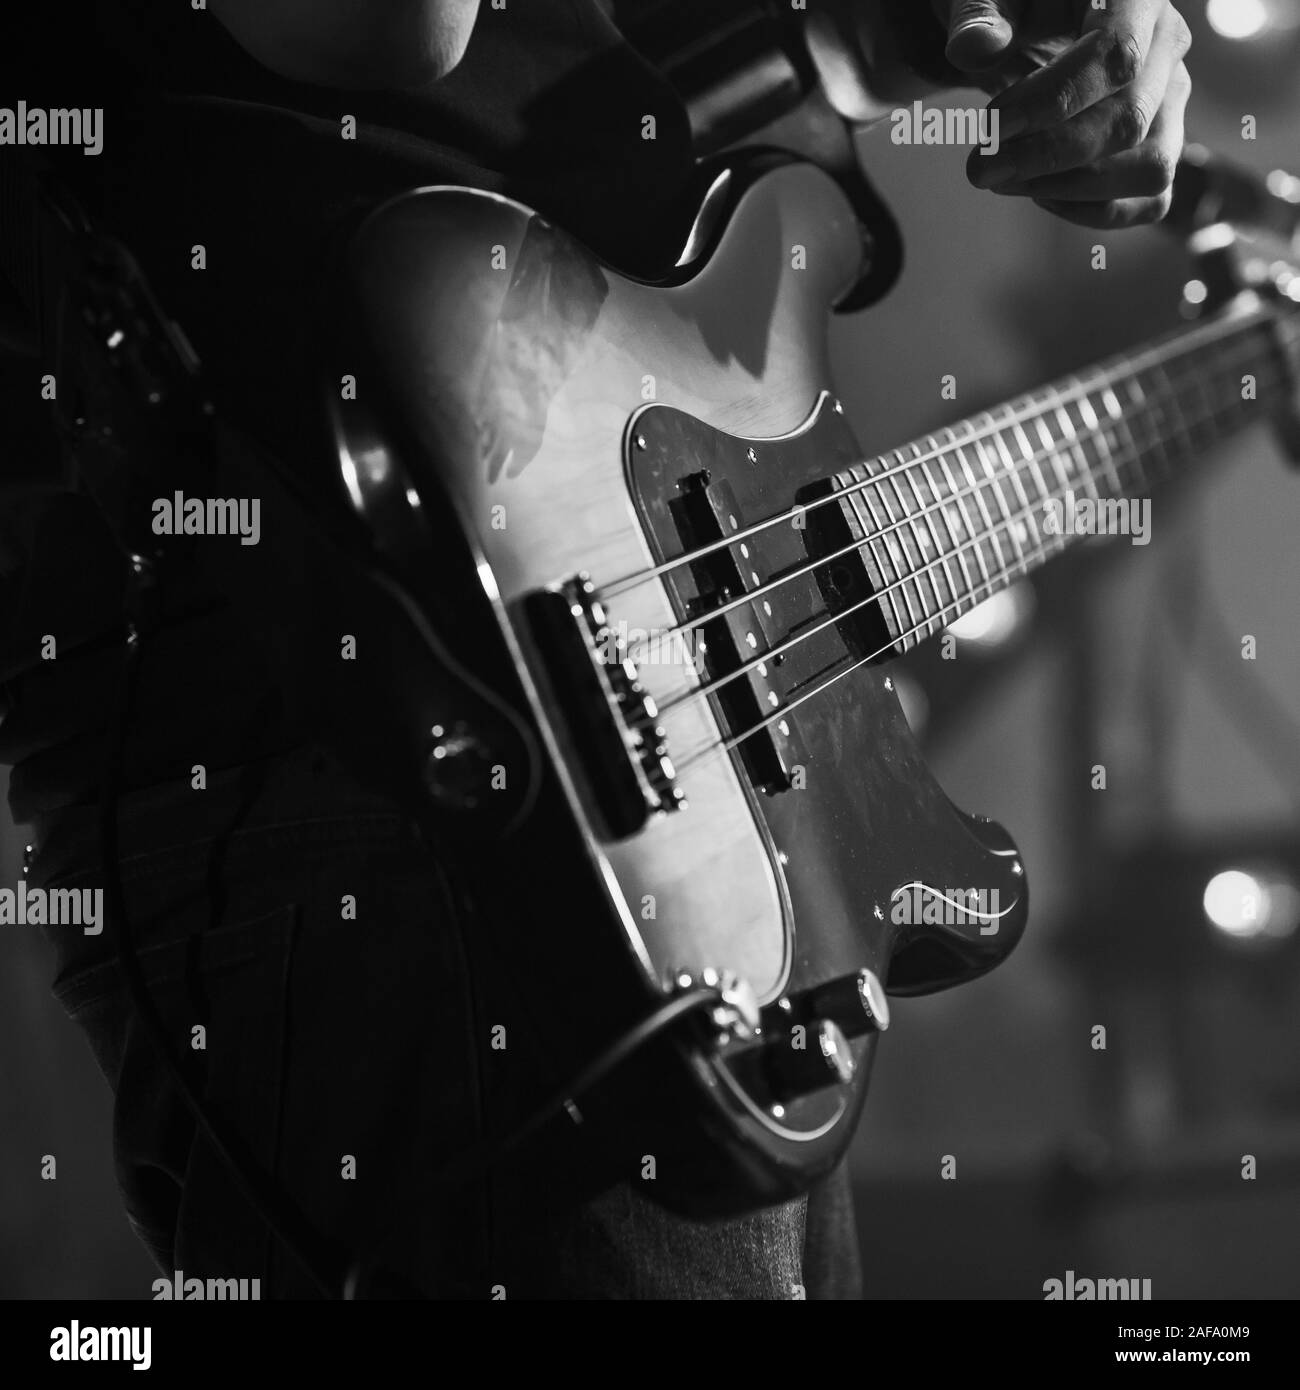 https://c8.alamy.com/comp/2AFA0M9/electric-bass-guitar-live-music-theme-retro-stylized-square-black-and-white-photo-2AFA0M9.jpg